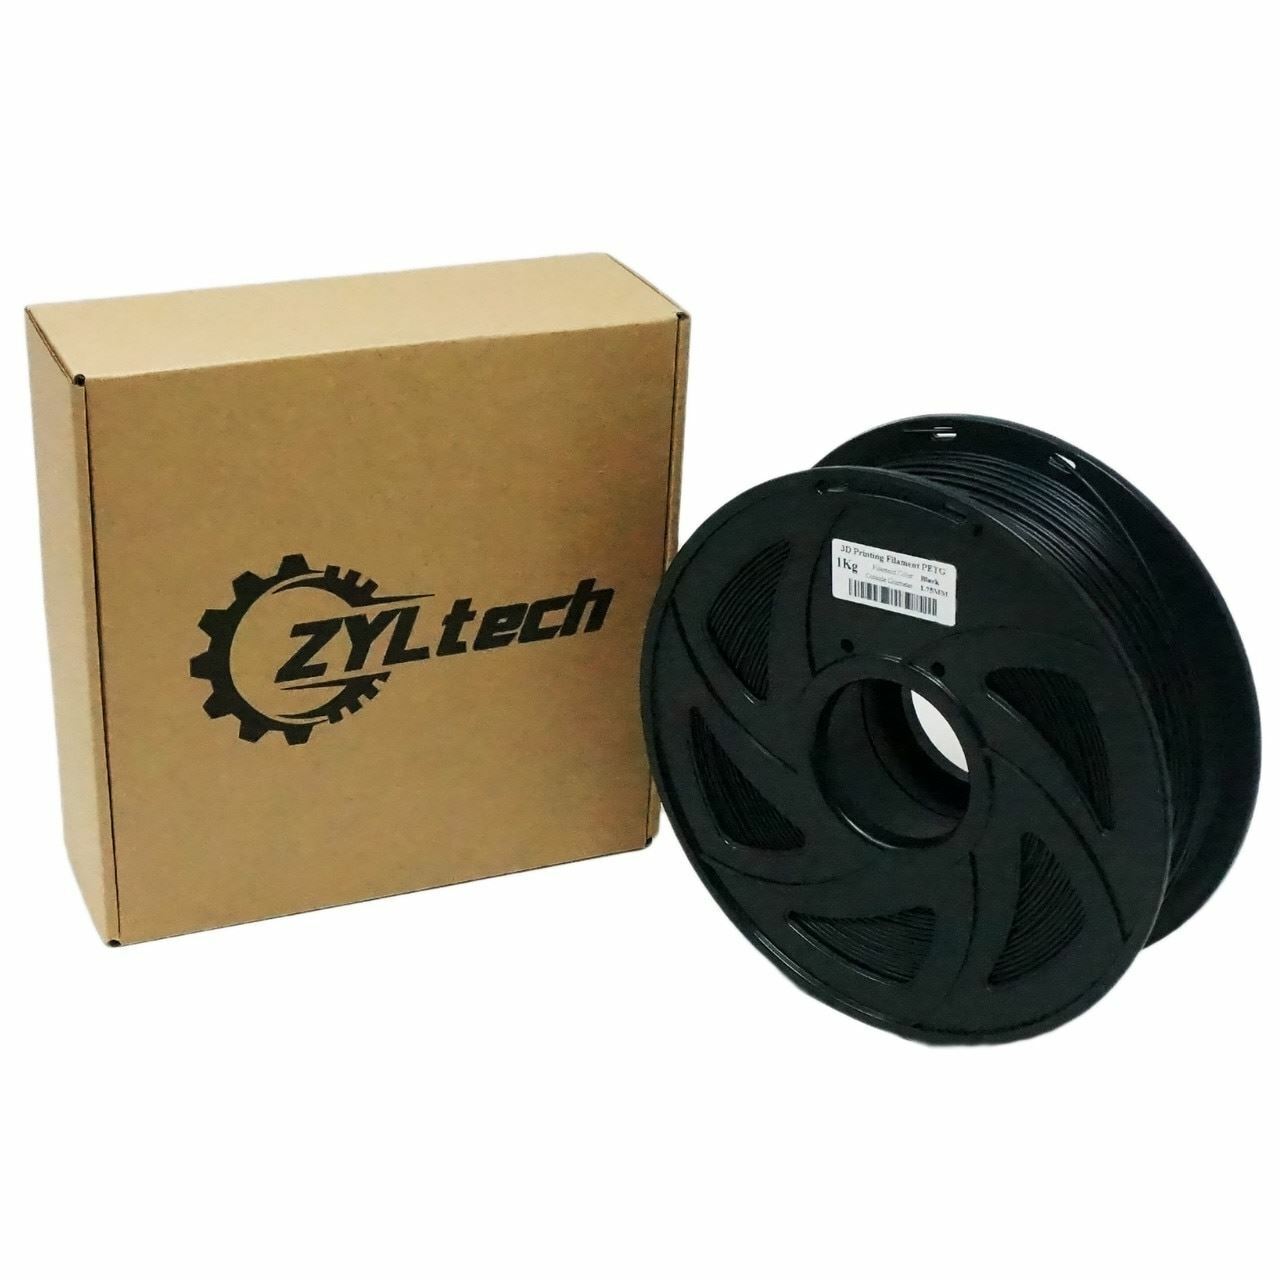 ZYLtech Black PETG 3D printer filament 1.75 mm 1 kg 2.2 lbs